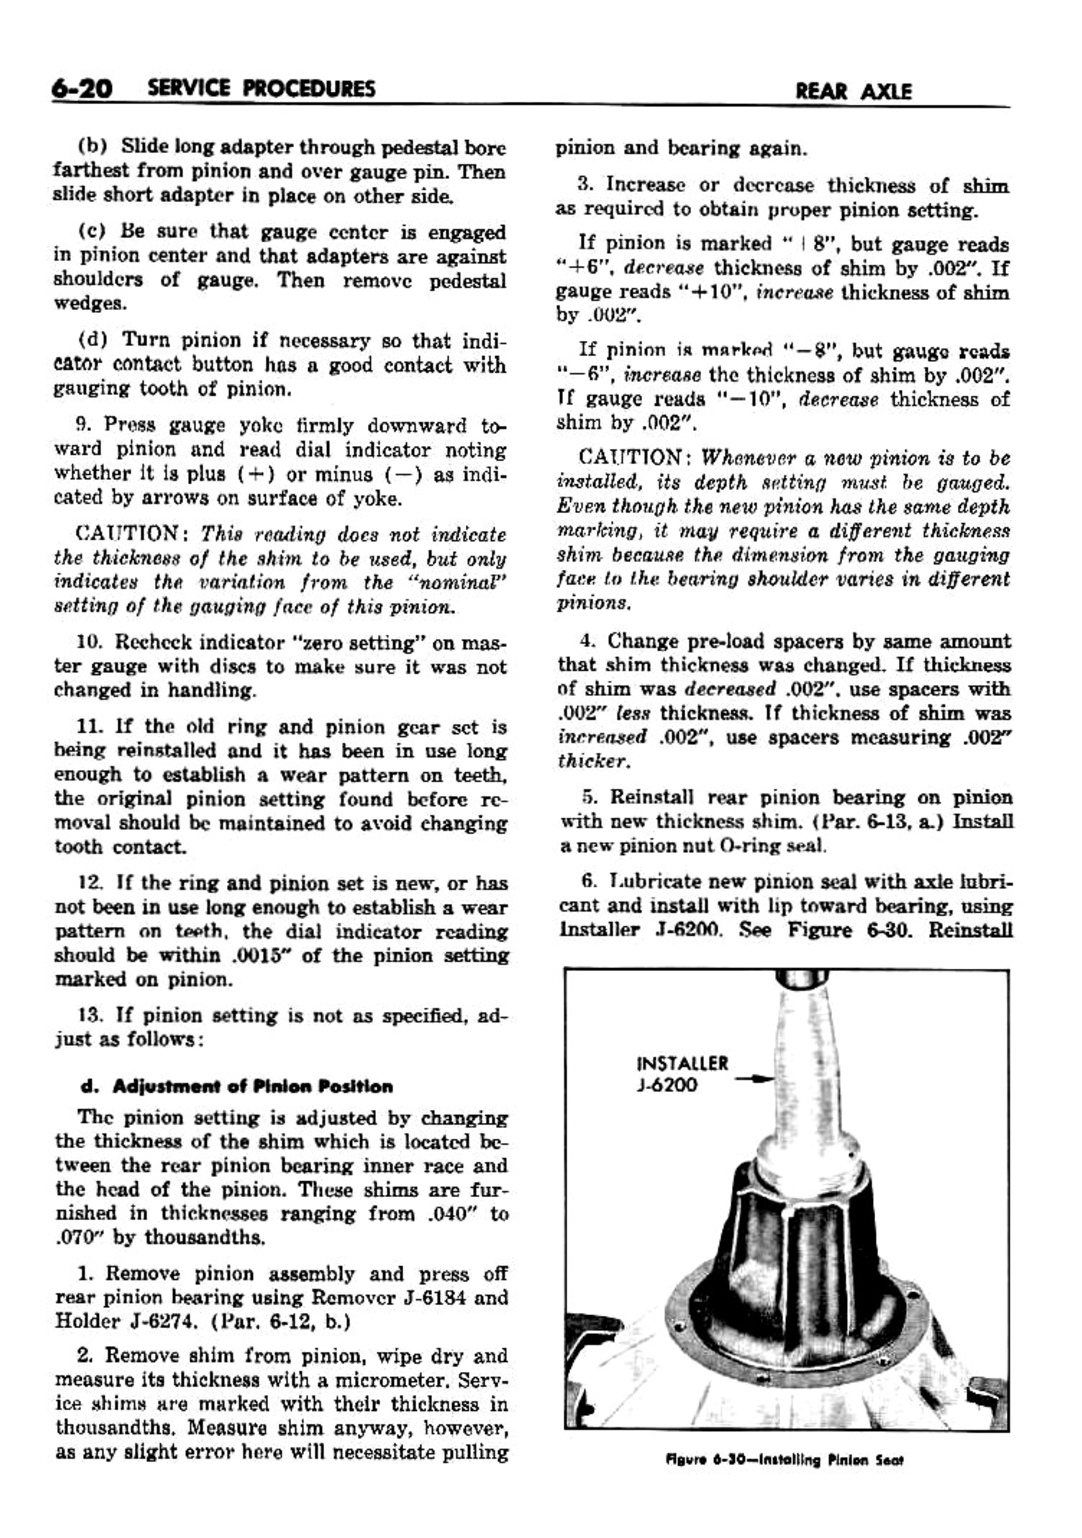 n_07 1959 Buick Shop Manual - Rear Axle-020-020.jpg